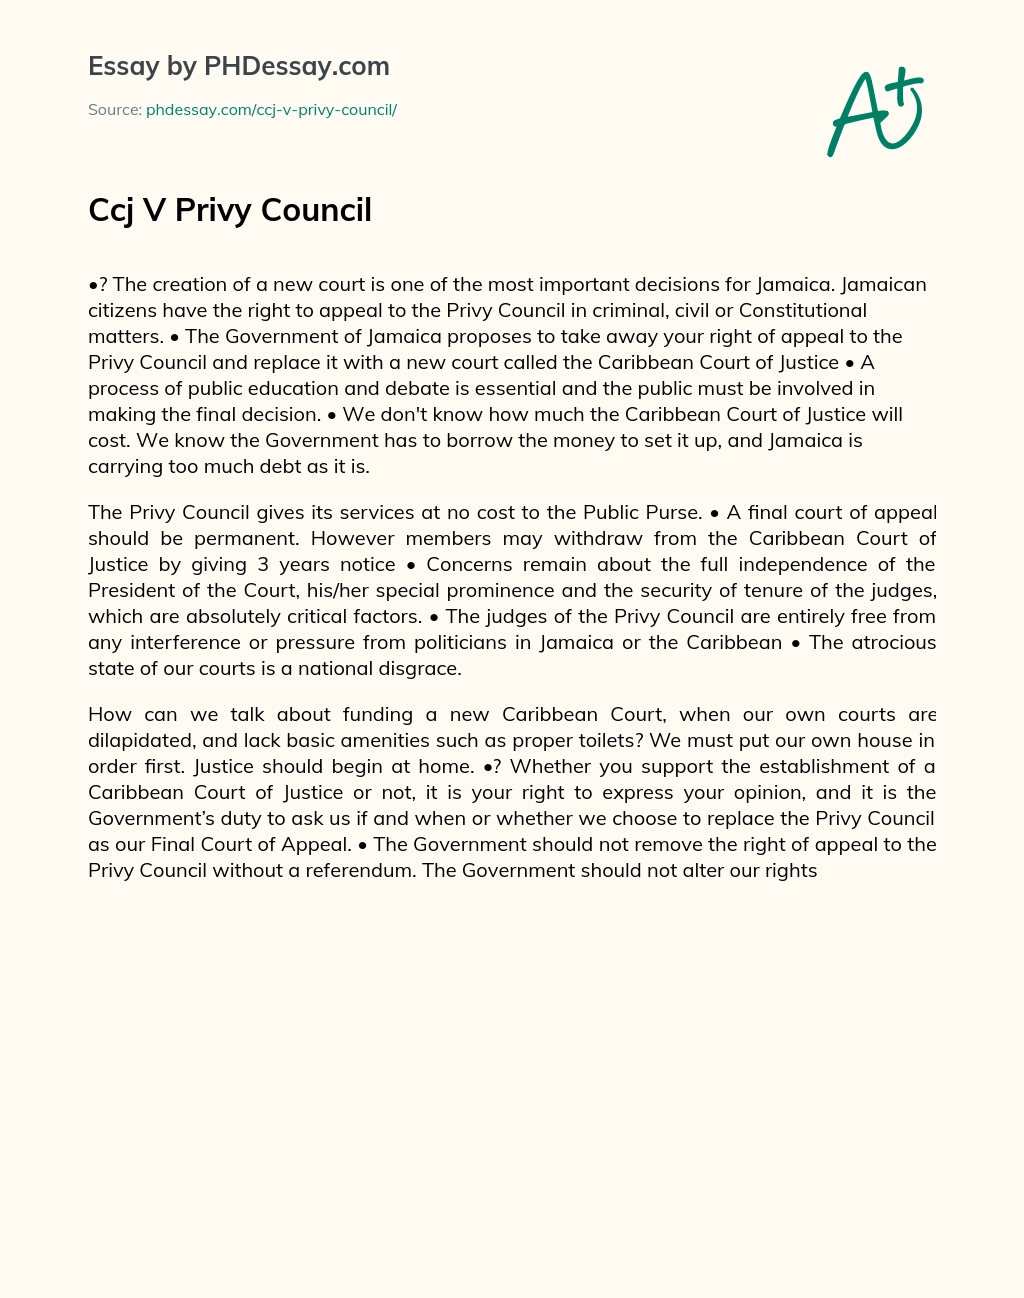 Ccj V Privy Council essay